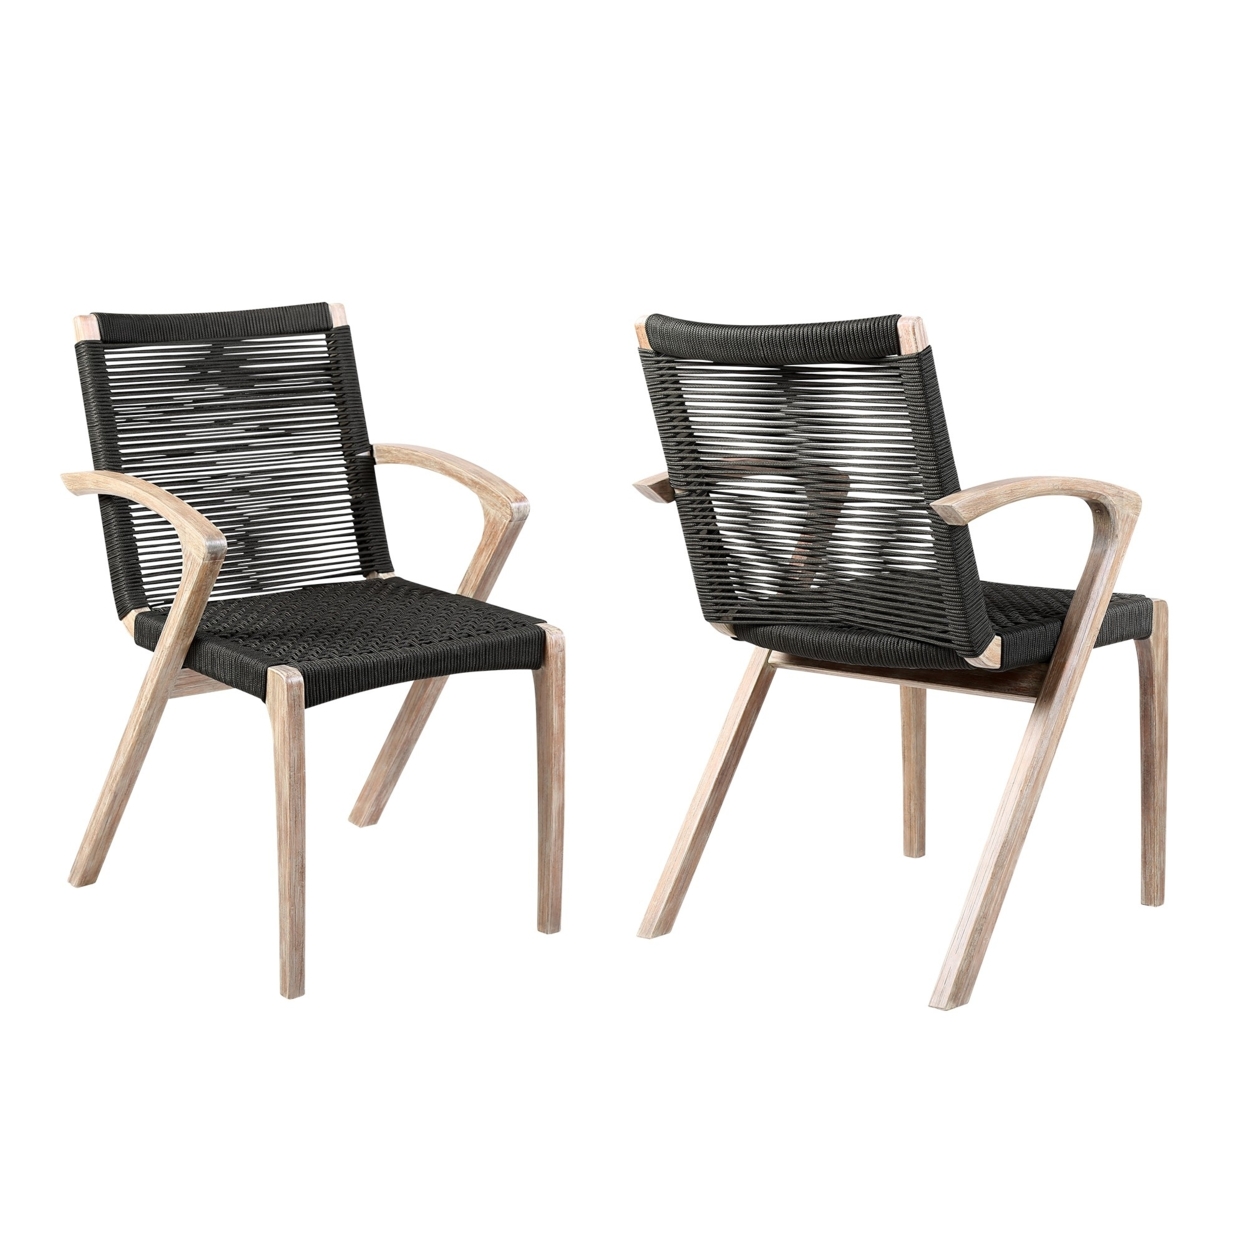 Ivan 22 Inch Dining Chair, Set Of 2, Light Brown Eucalyptus Wood, Charcoal- Saltoro Sherpi